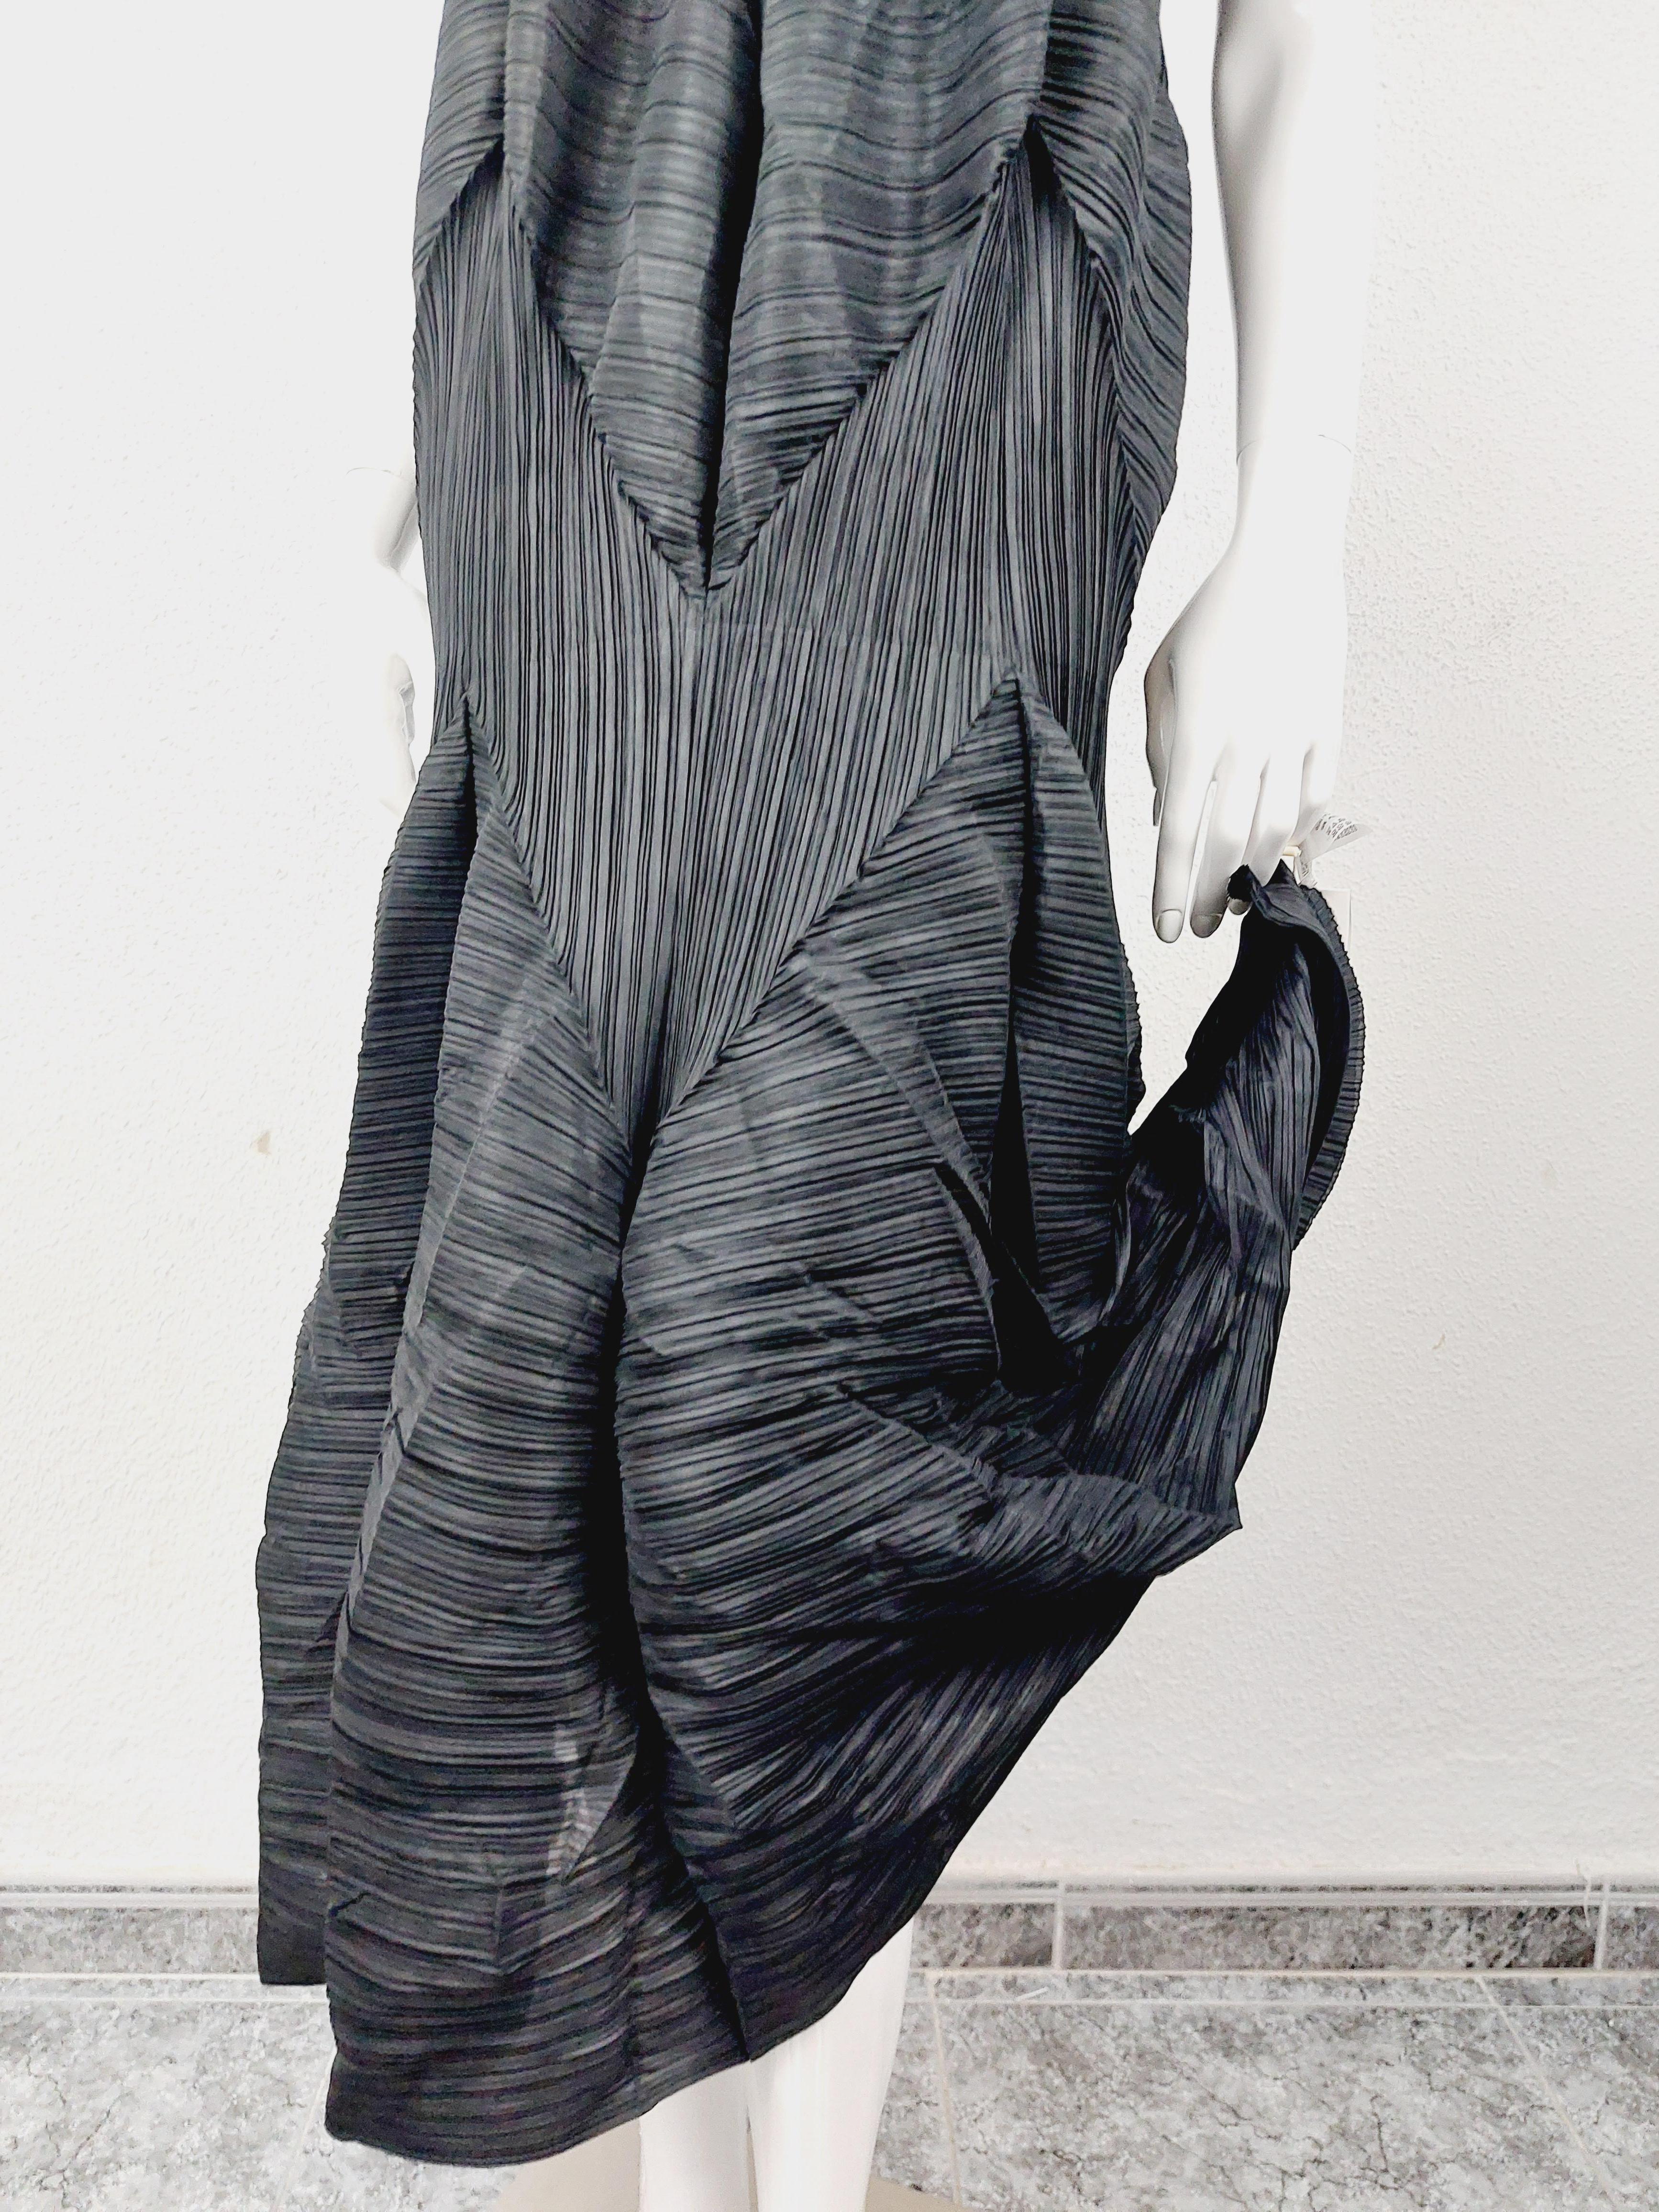 Issey Miyake Pleats Please Origami Ruffled Japanese Kimono Wrinked Maxi Dress 6